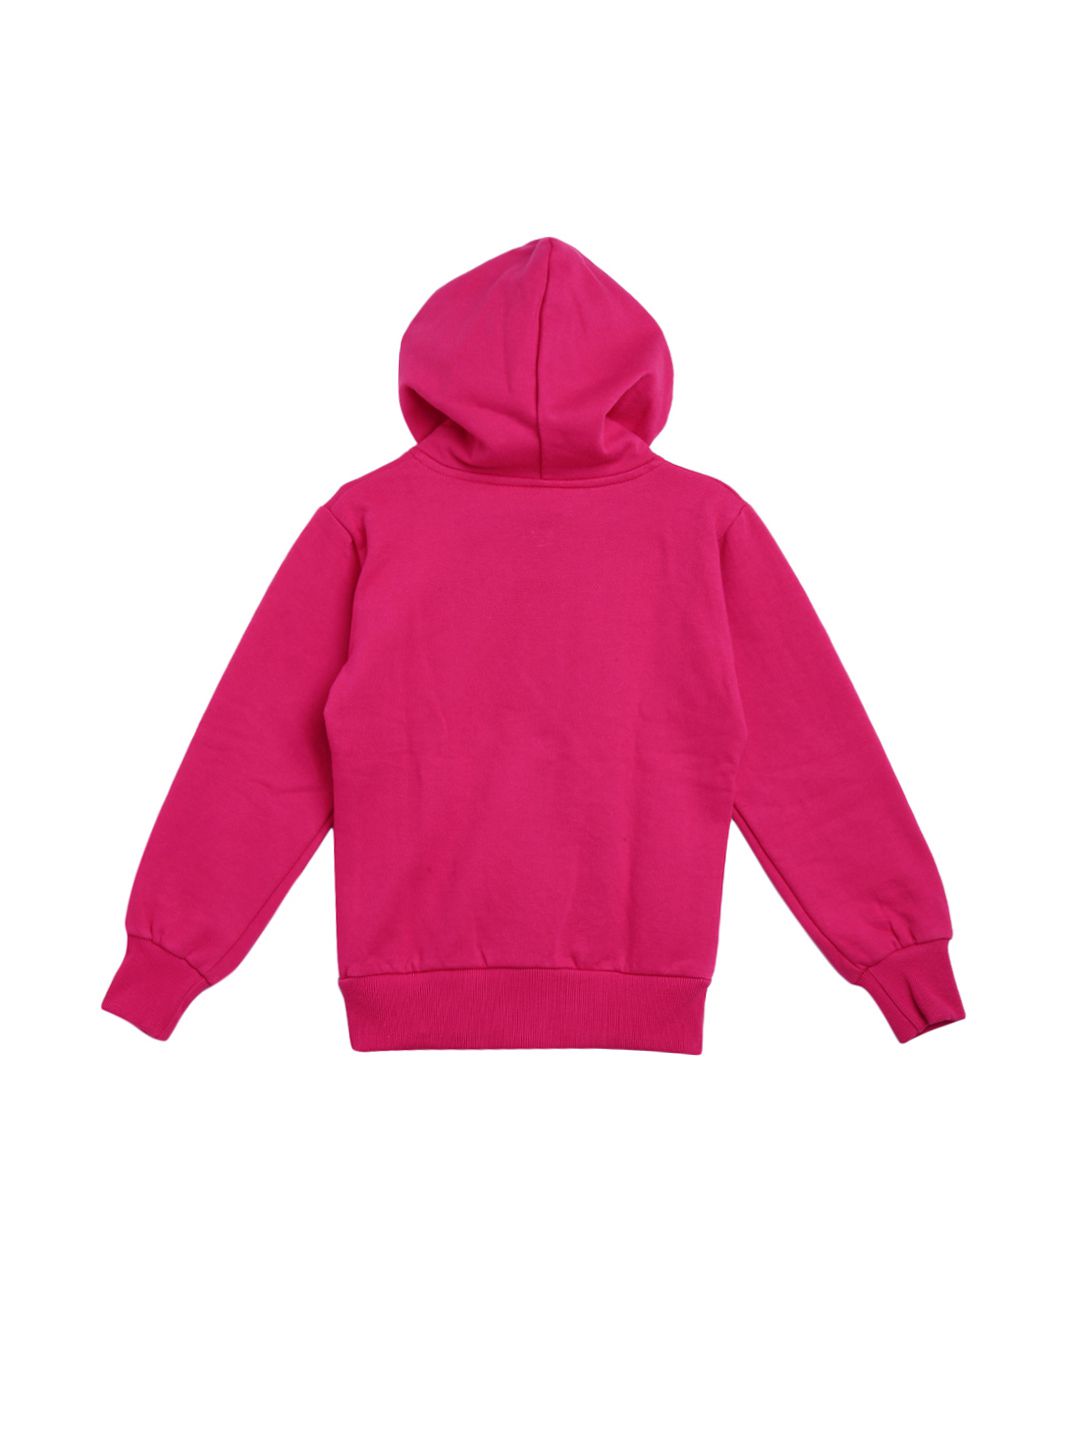 sweatshirts - Buy sweatshirts Online at Low Price - Snapdeal